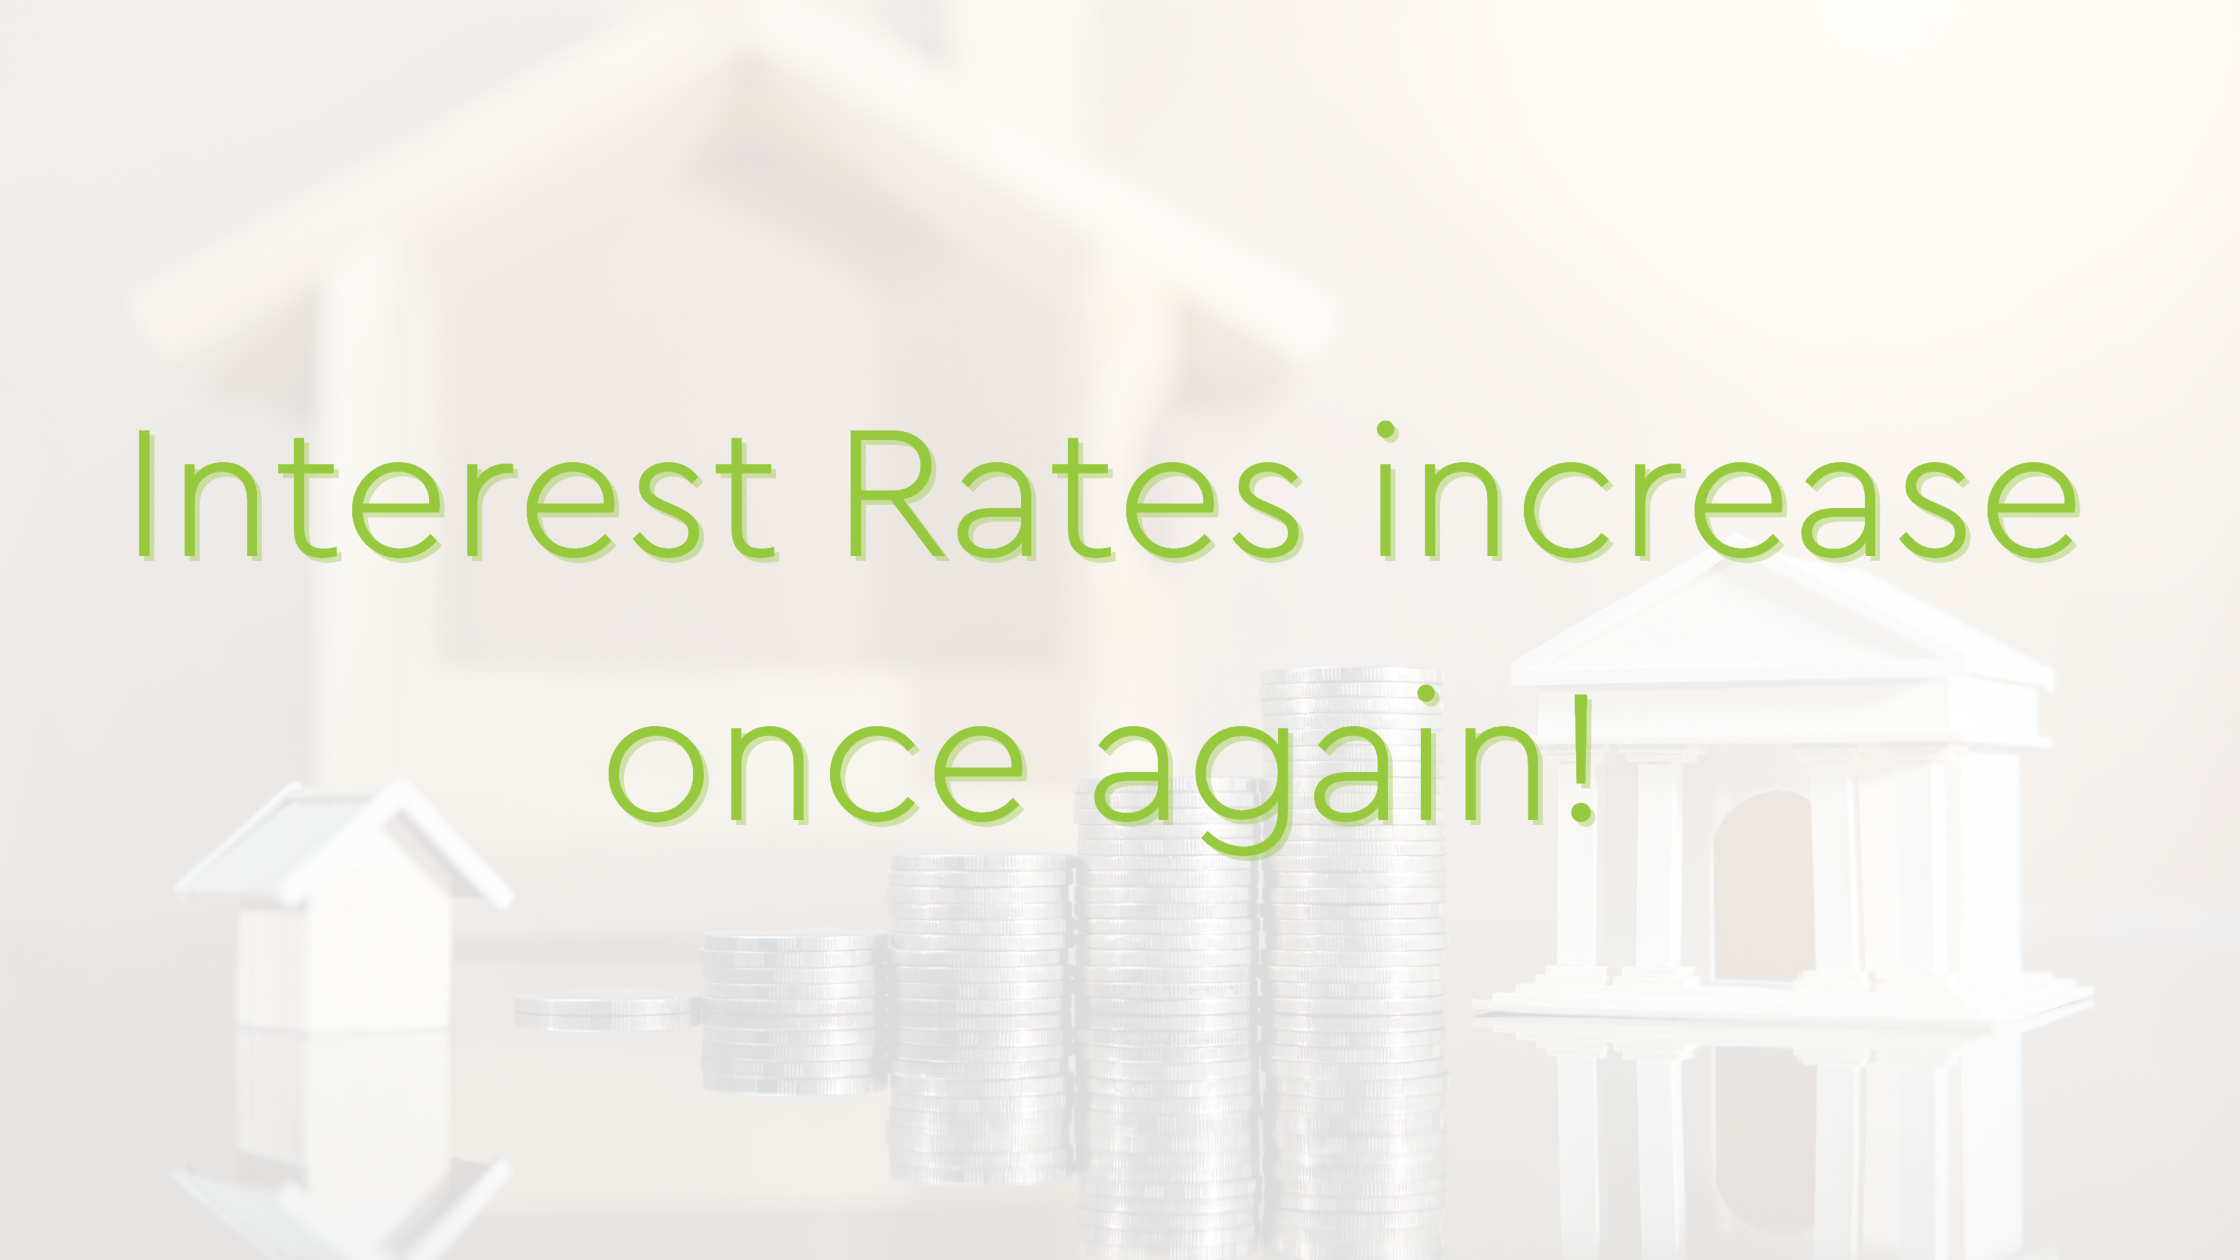 Interest rates increase again!